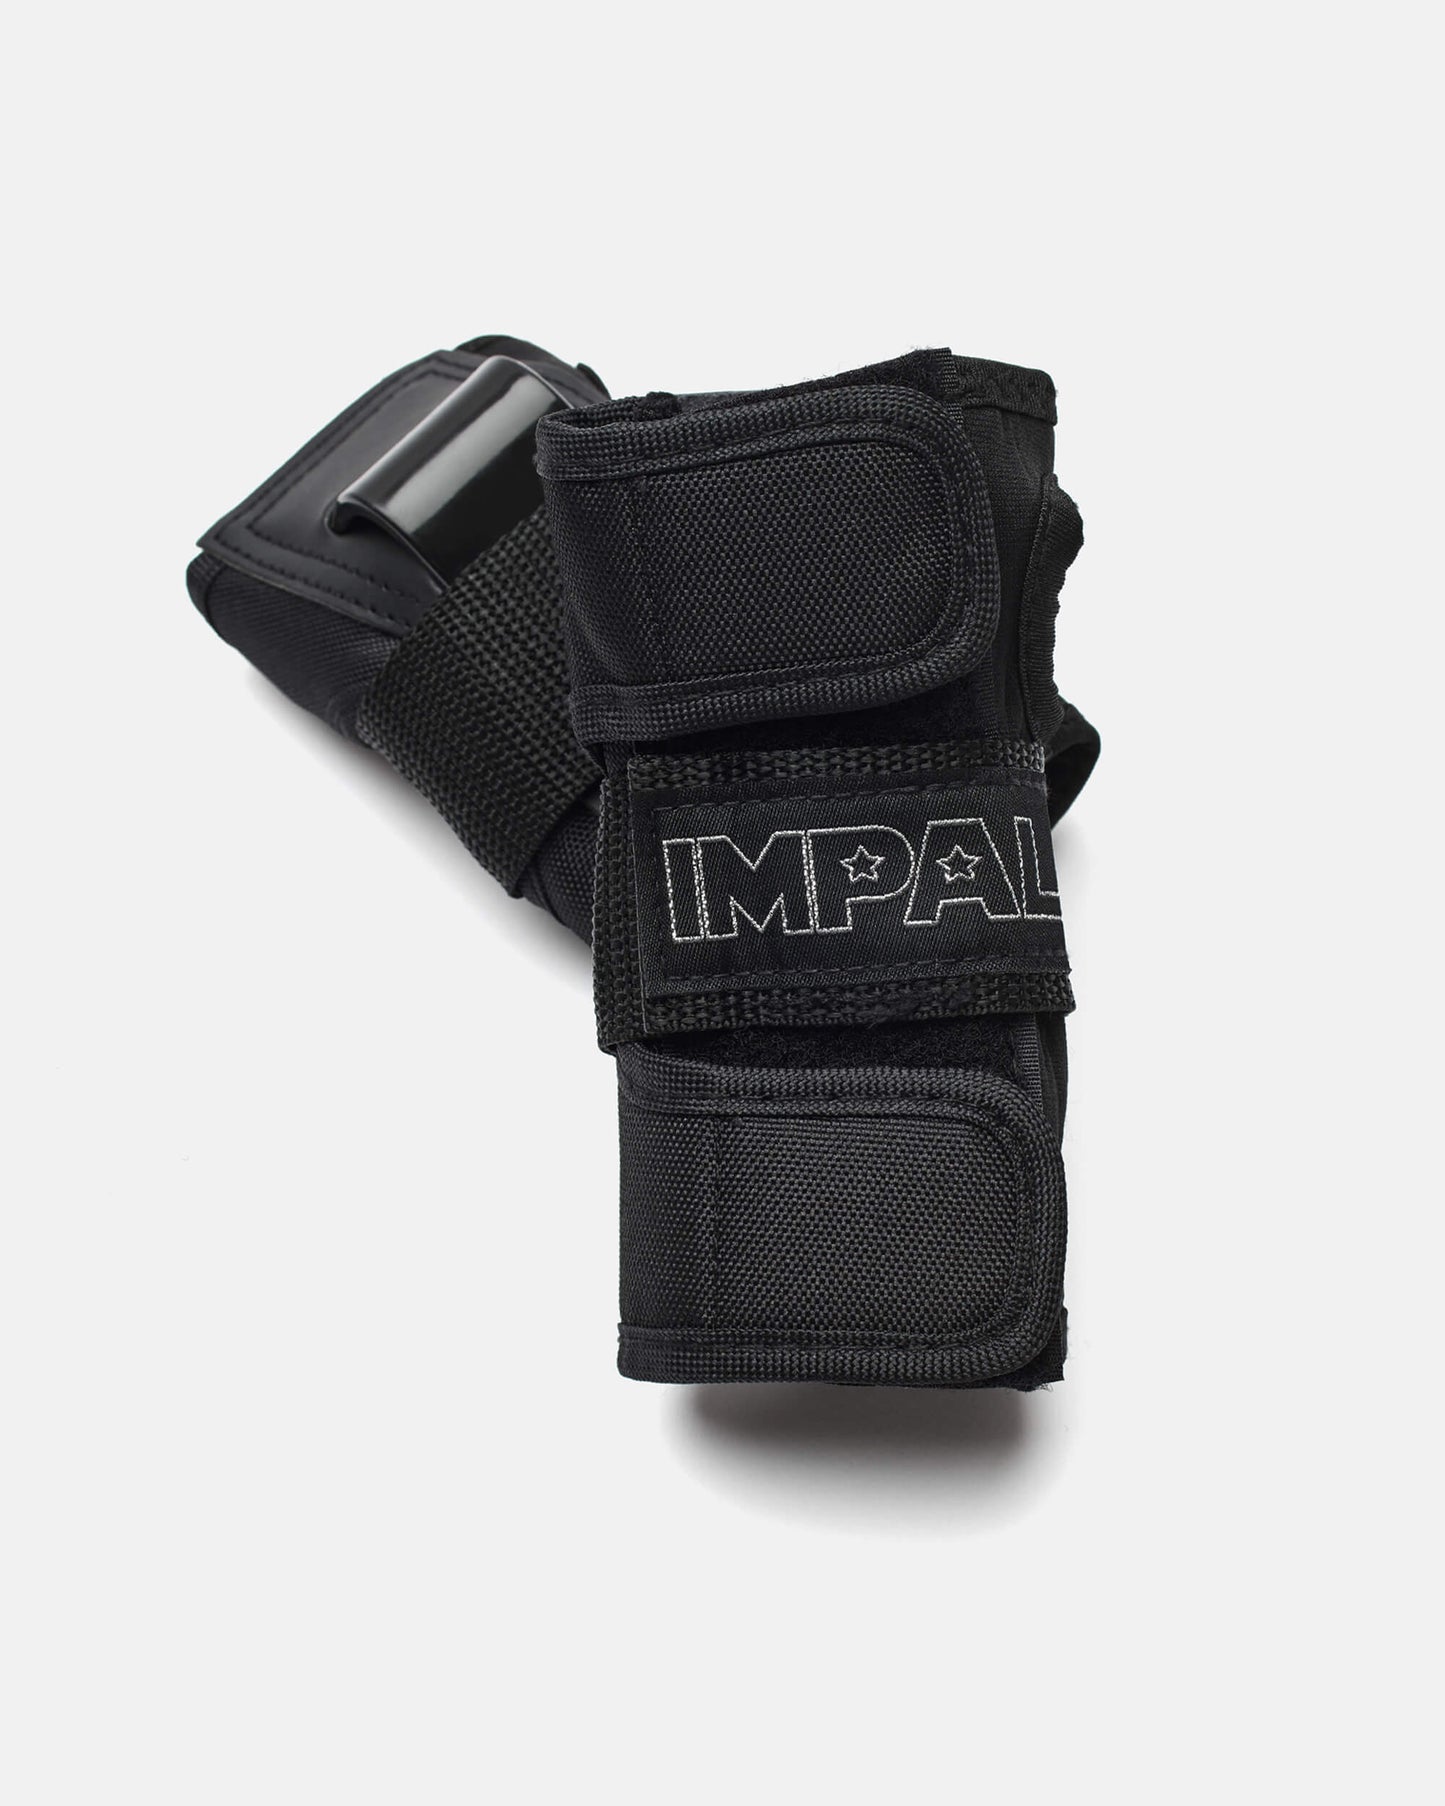 Impala Kids Protective Pack - Black